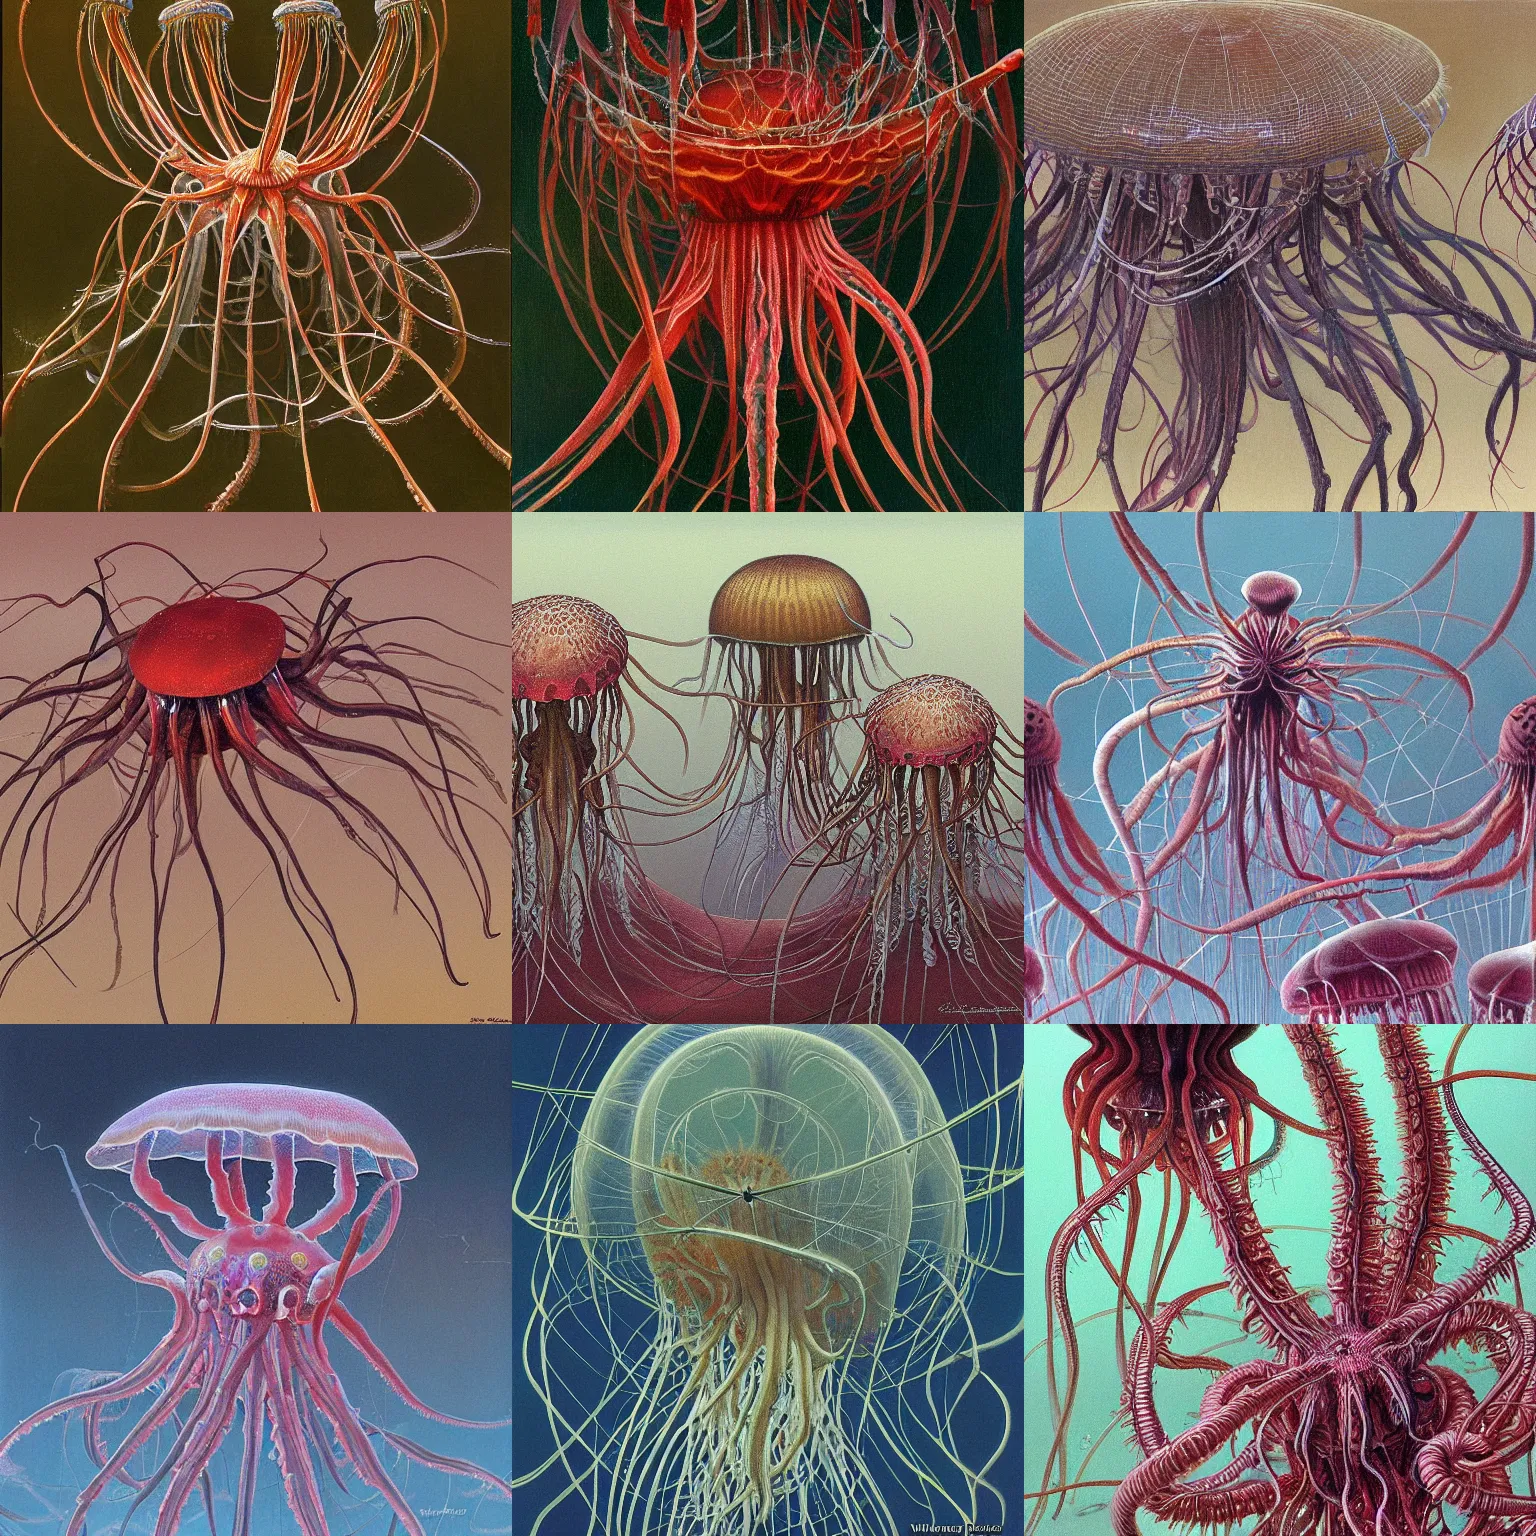 Prompt: painting of jellyfish spiders by wayne barlowe